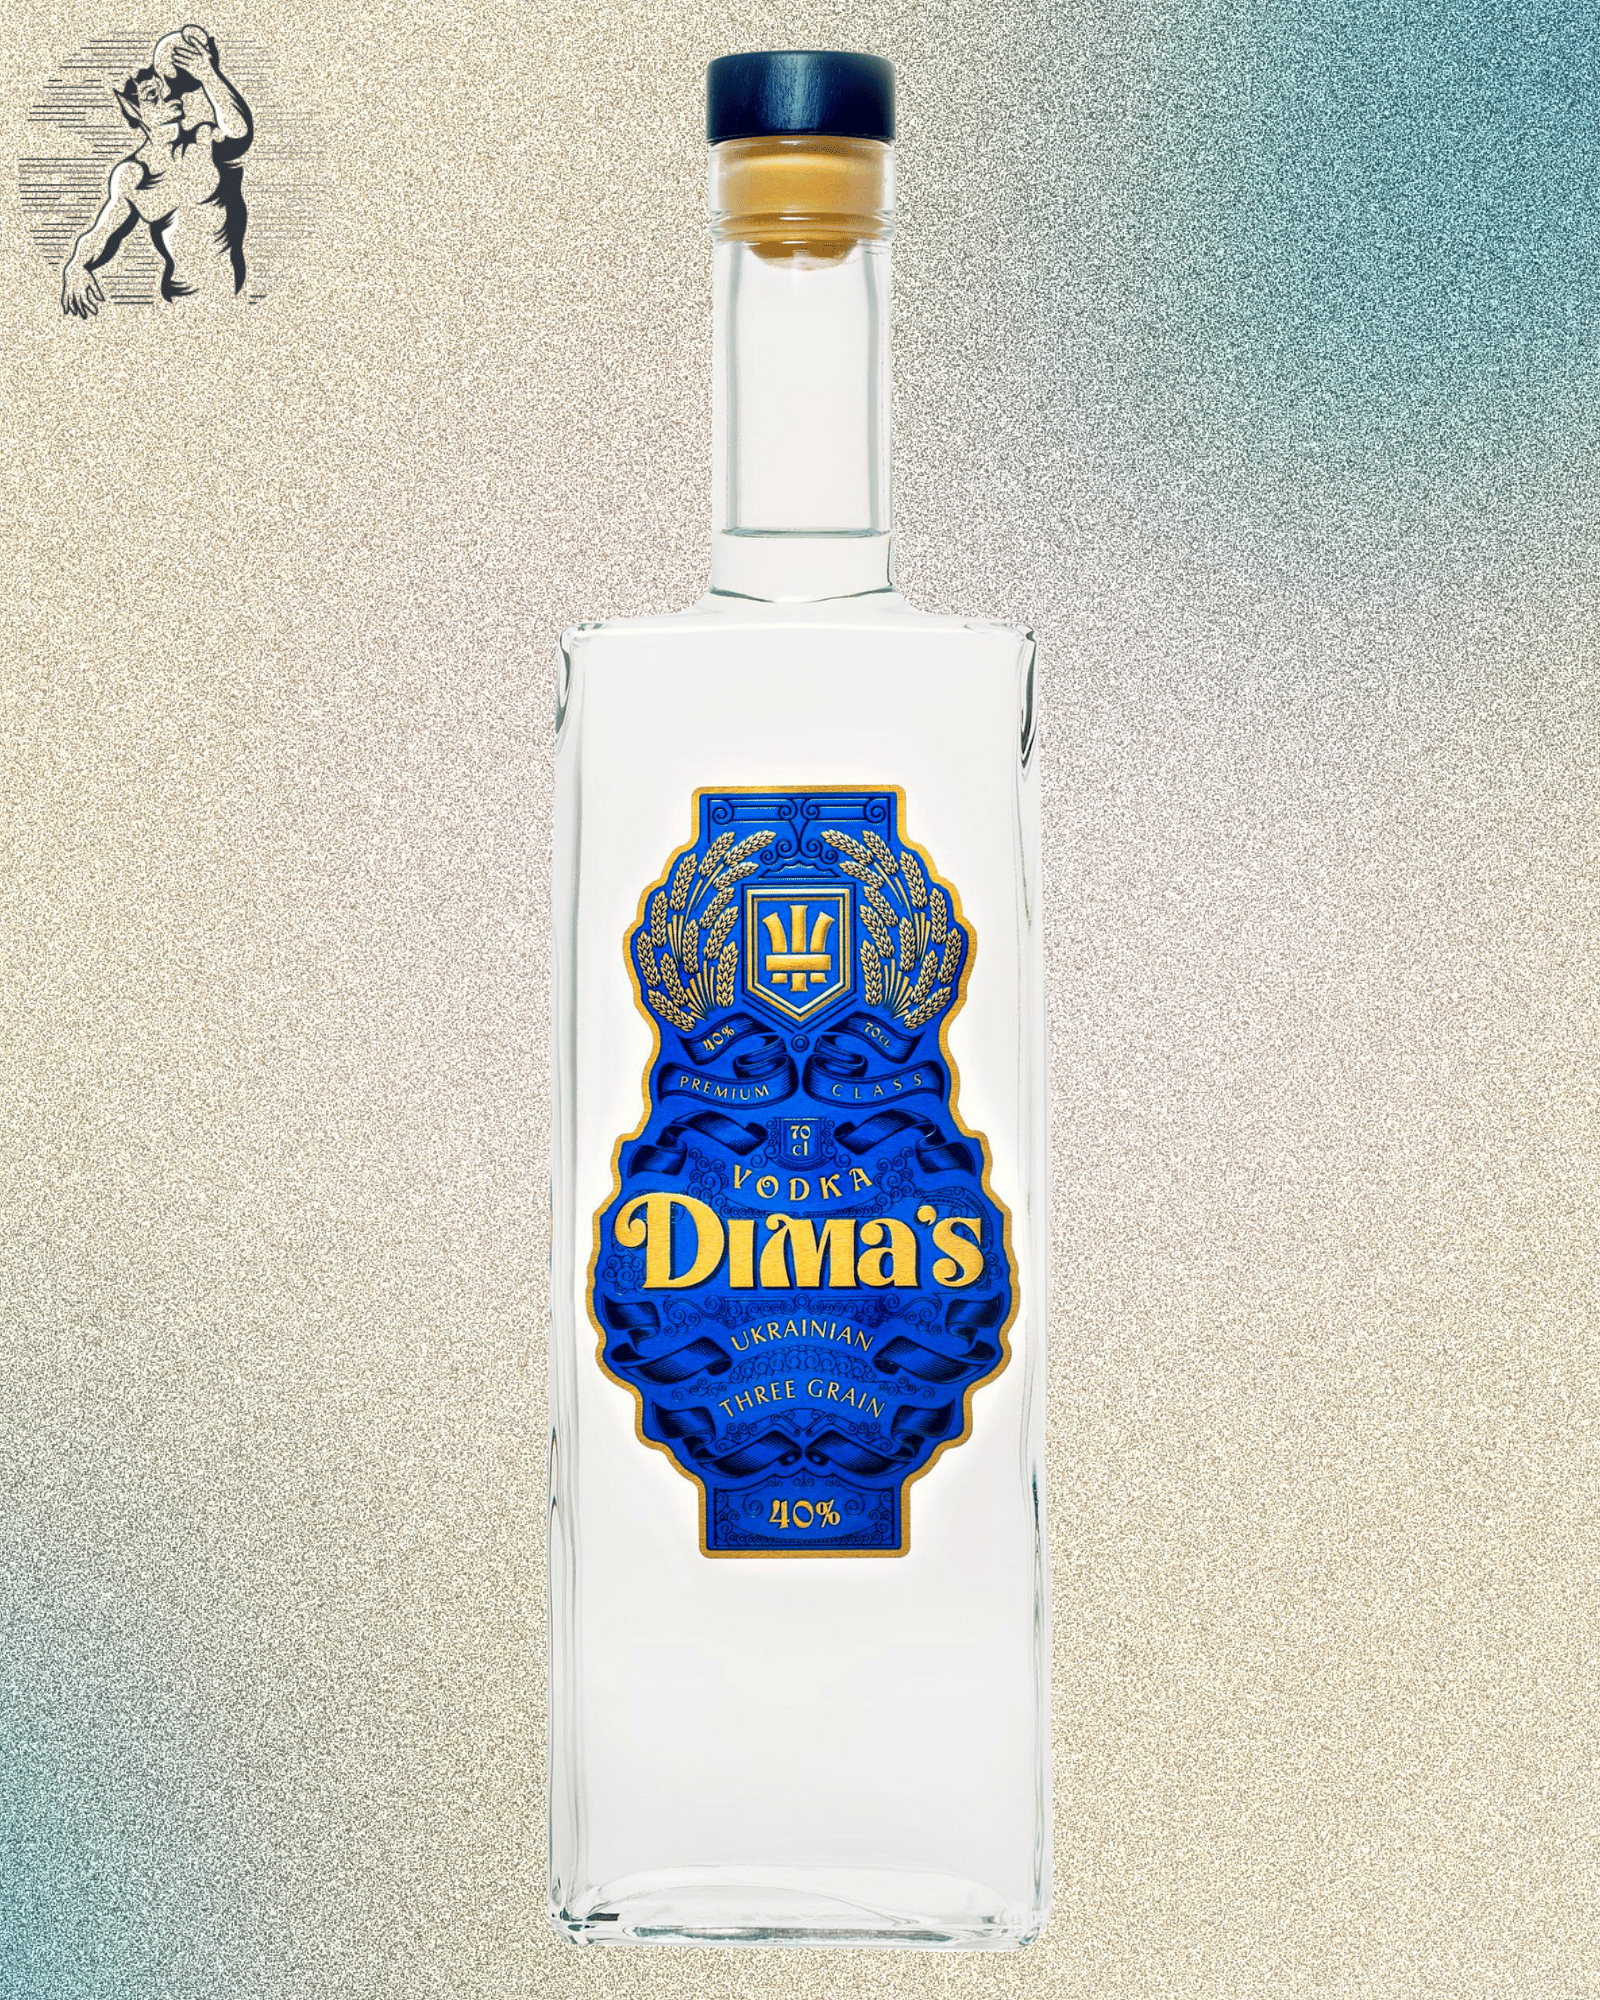 Dimas Vodka, ukrainsk vodka